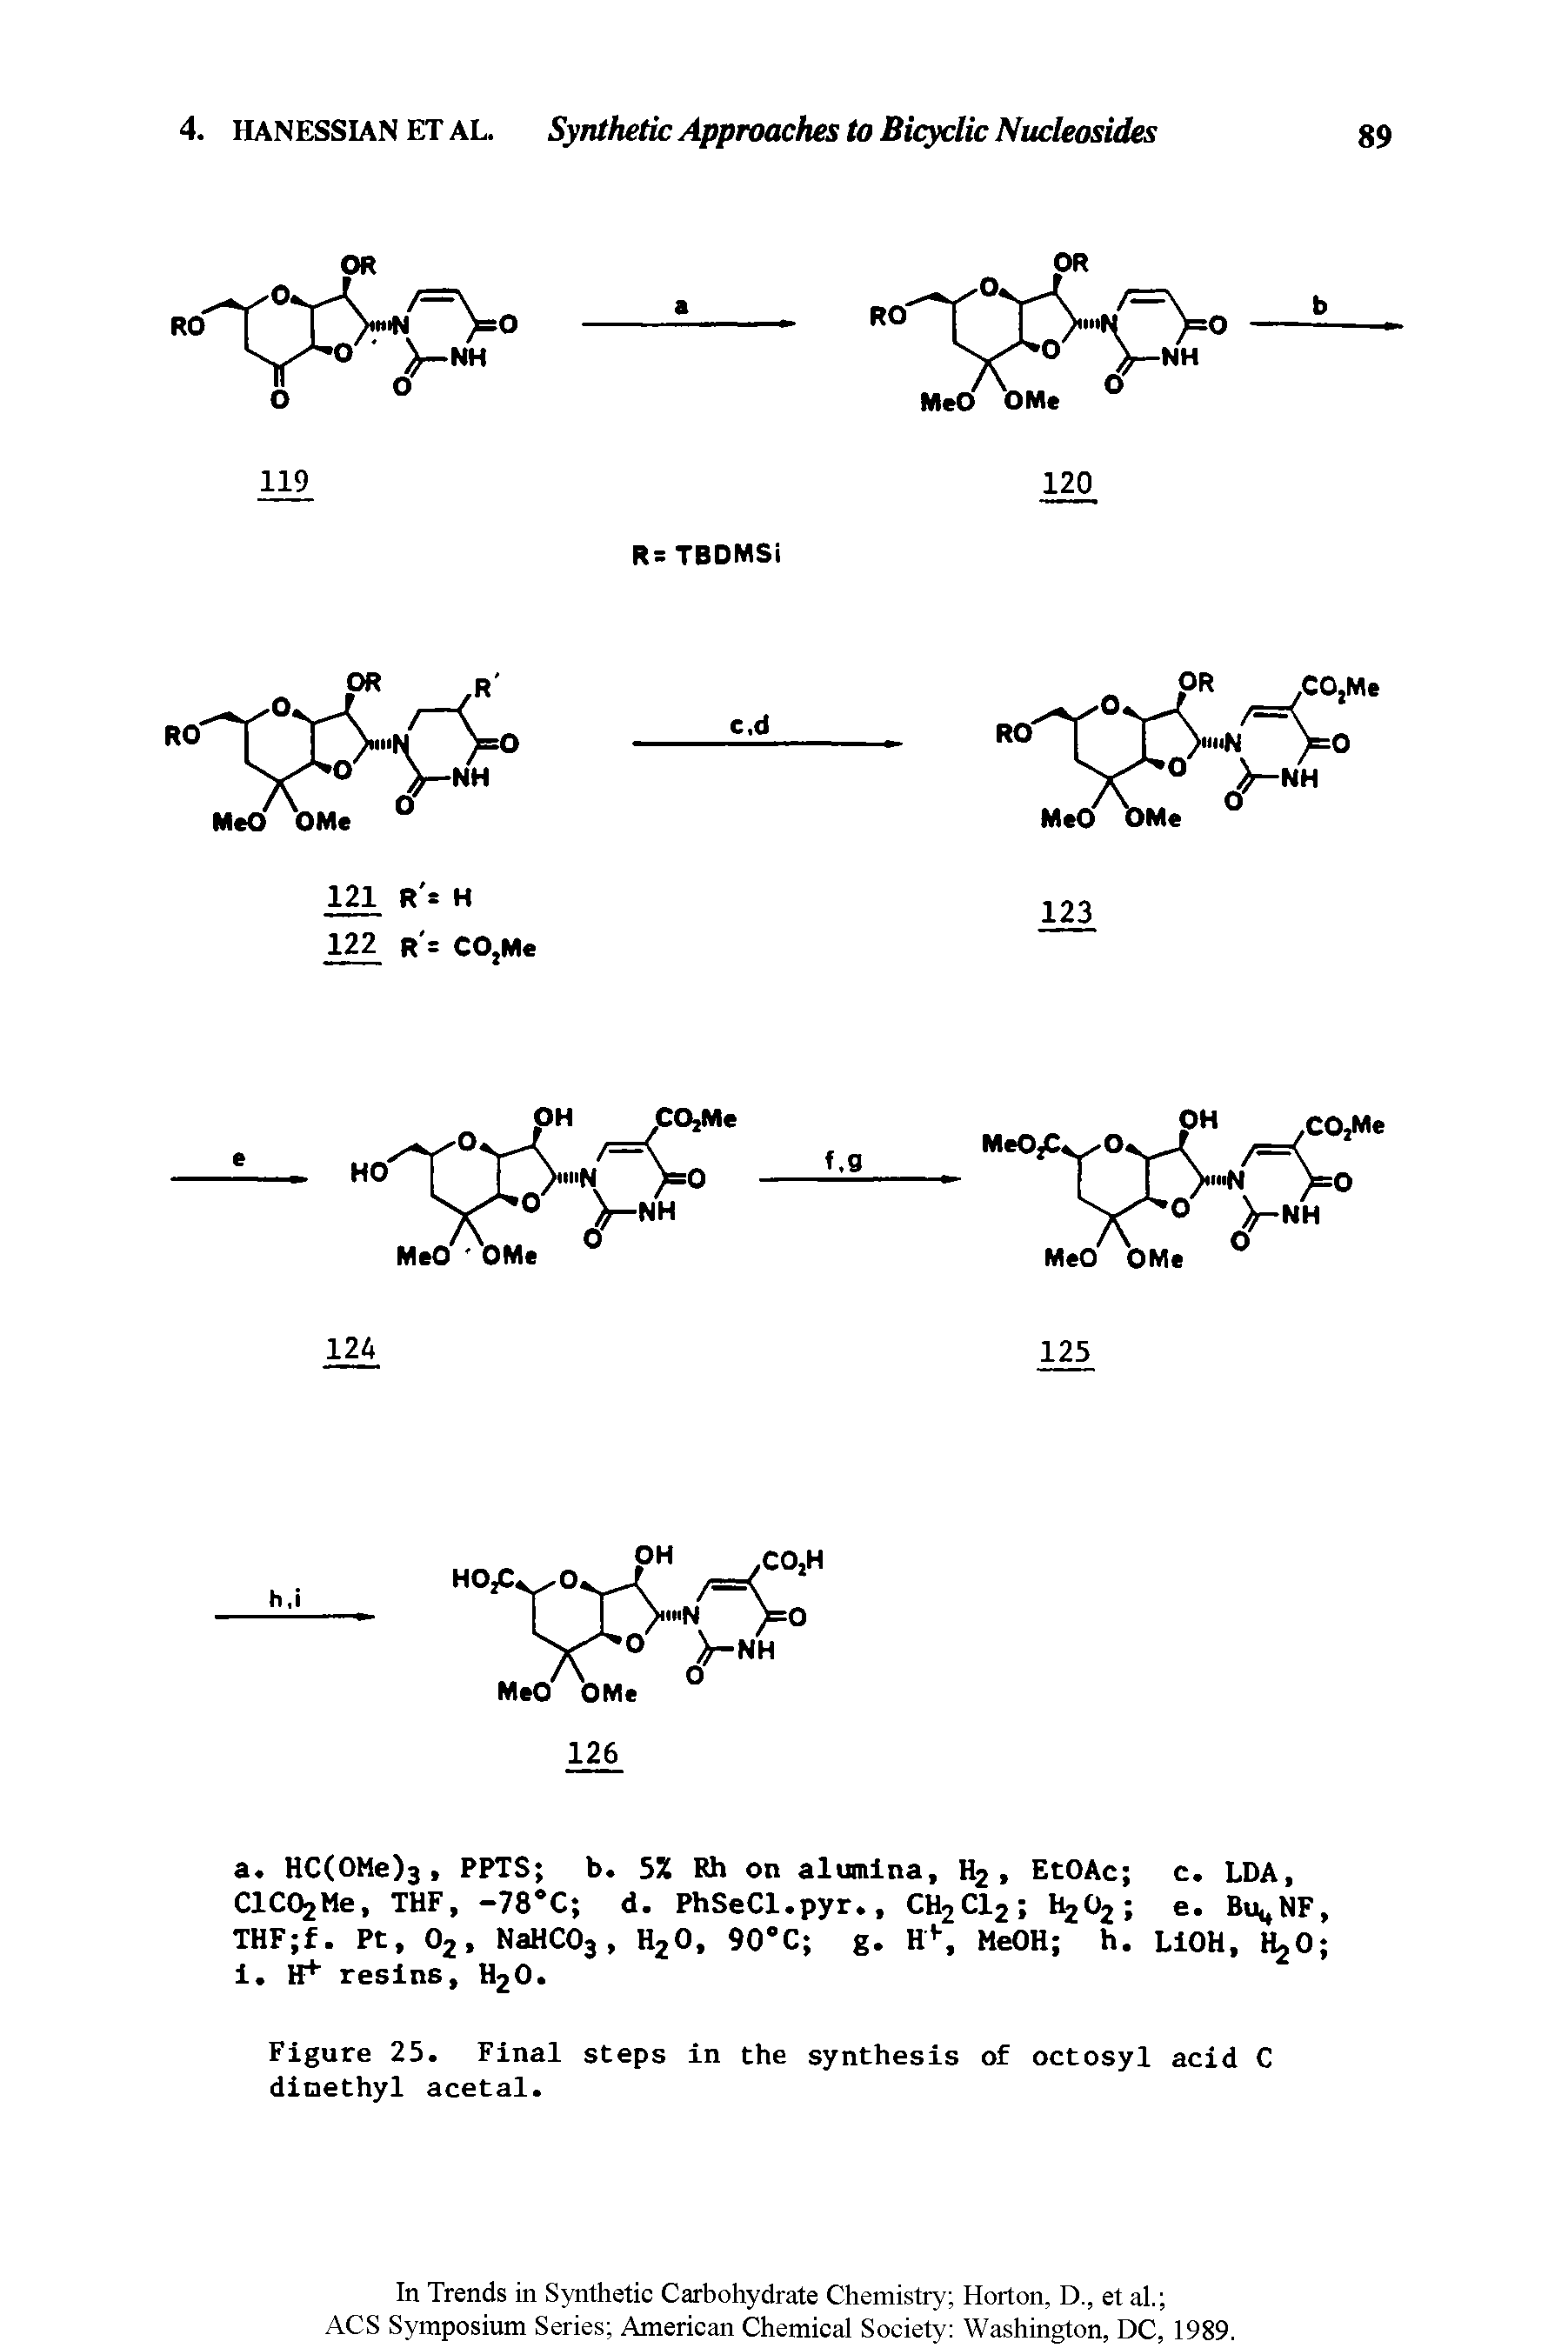 Figure 25. Final steps in the synthesis of octosyl acid C dimethyl acetal.